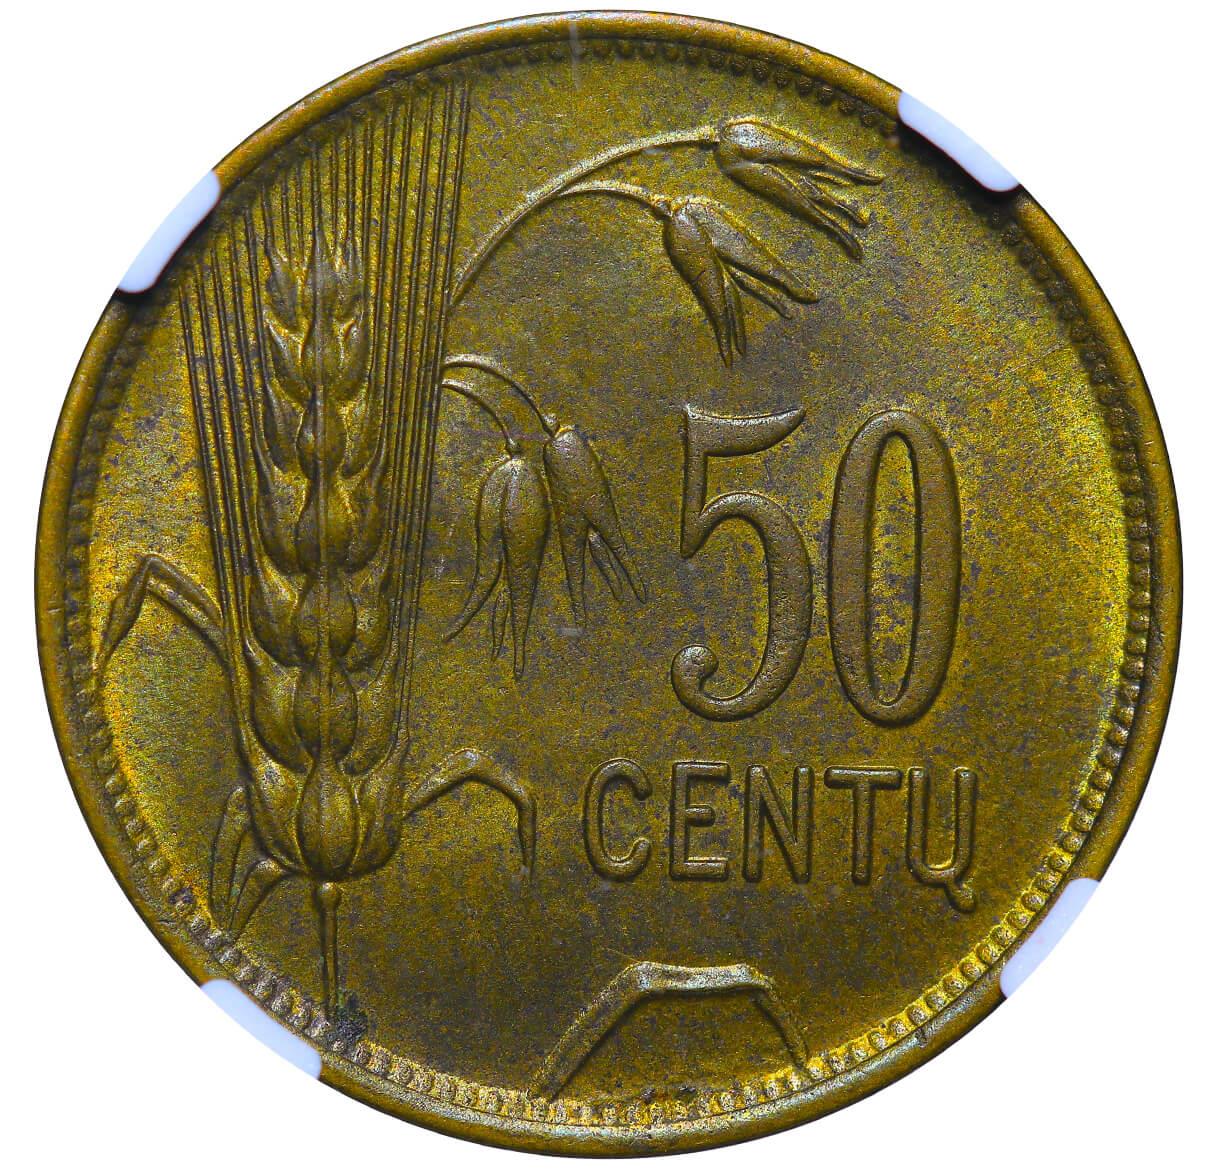 Lithuania, 50 Centu, 1925 year, NGC, MS 63 - Image 3 of 3